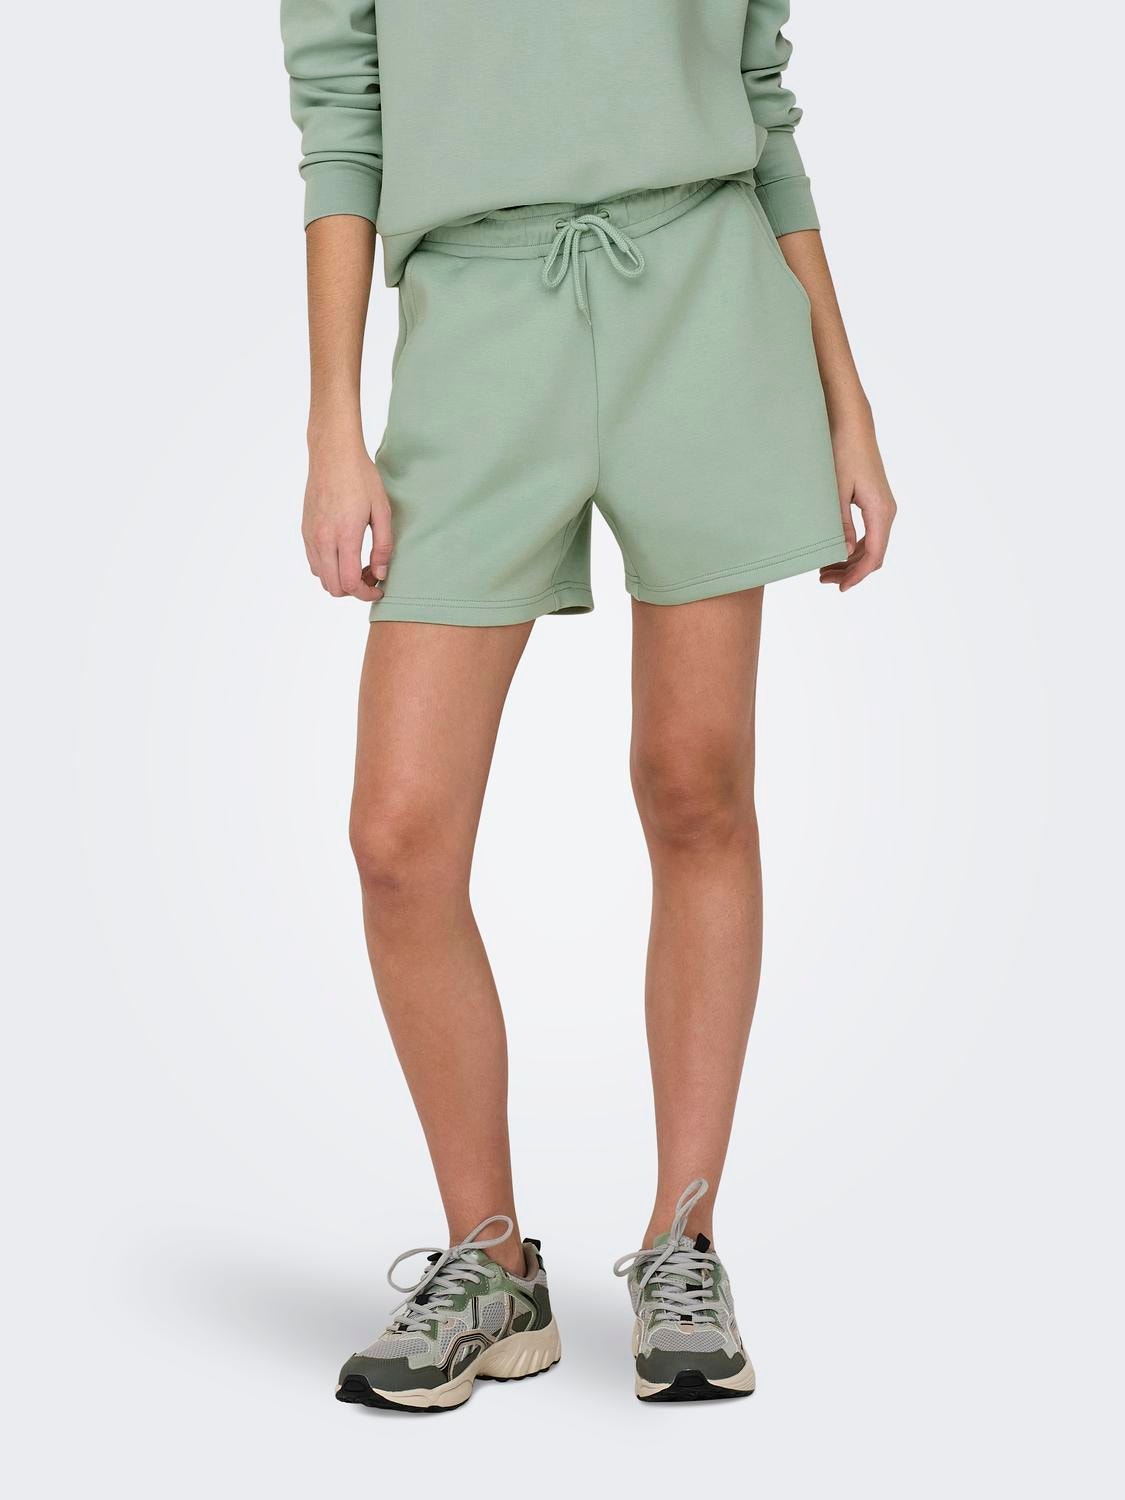 ONLY Couleur unie Shorts en molleton -Frosty Green - 15245851